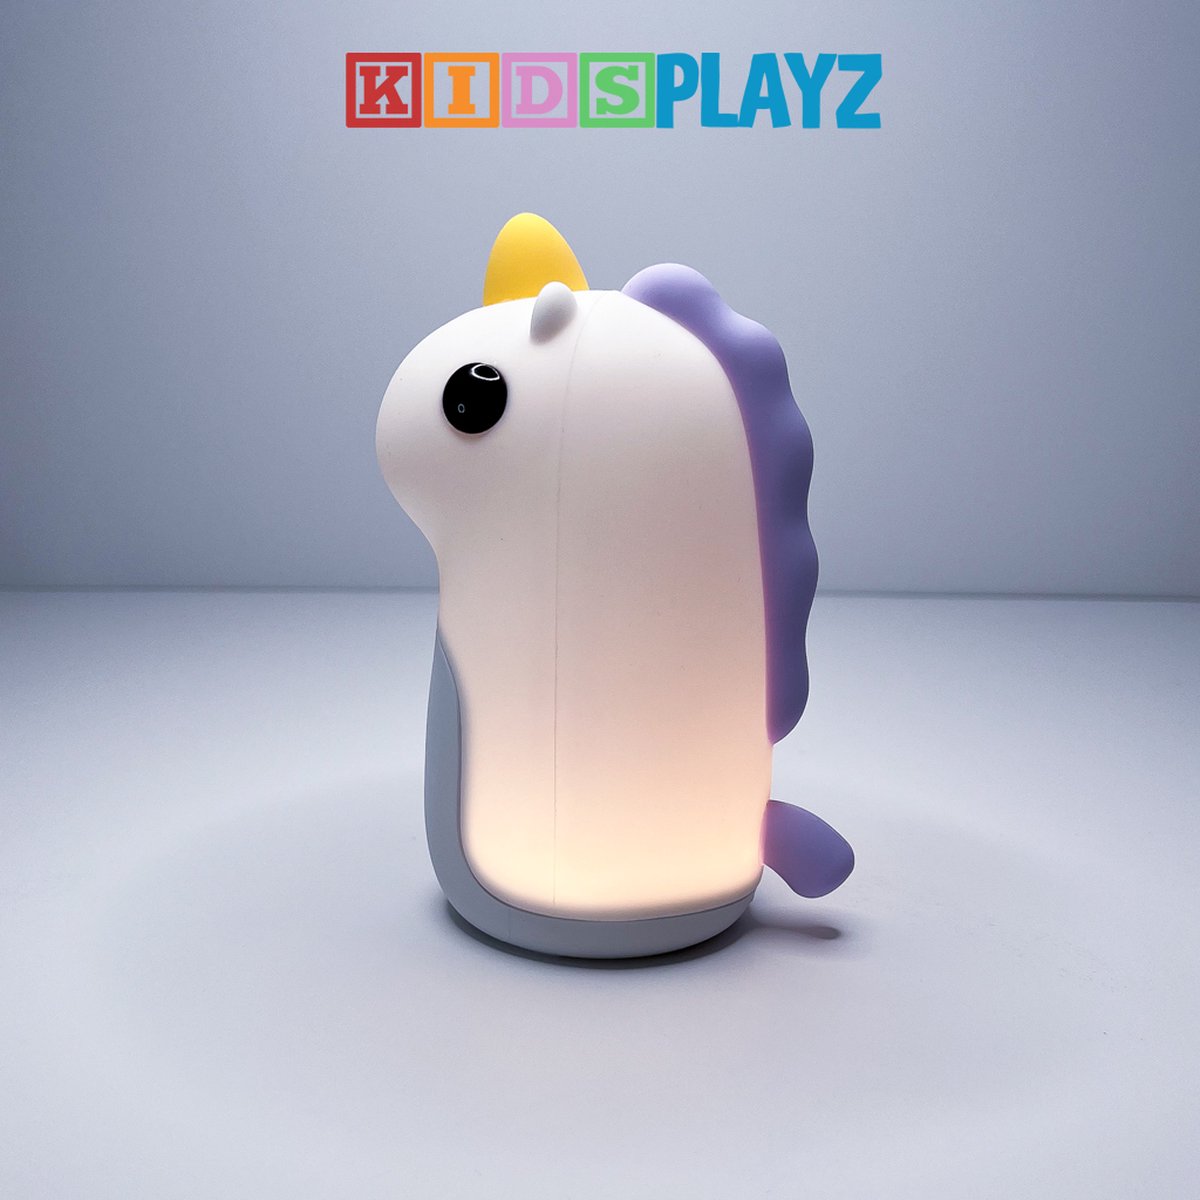 KidsPlayz Unicorn Slaaptrainer - Wekker - Nachtlampje - Kinderwekker - Wit en Multicolor - Oplaadbaar - Alarm Clock - Eco Modus